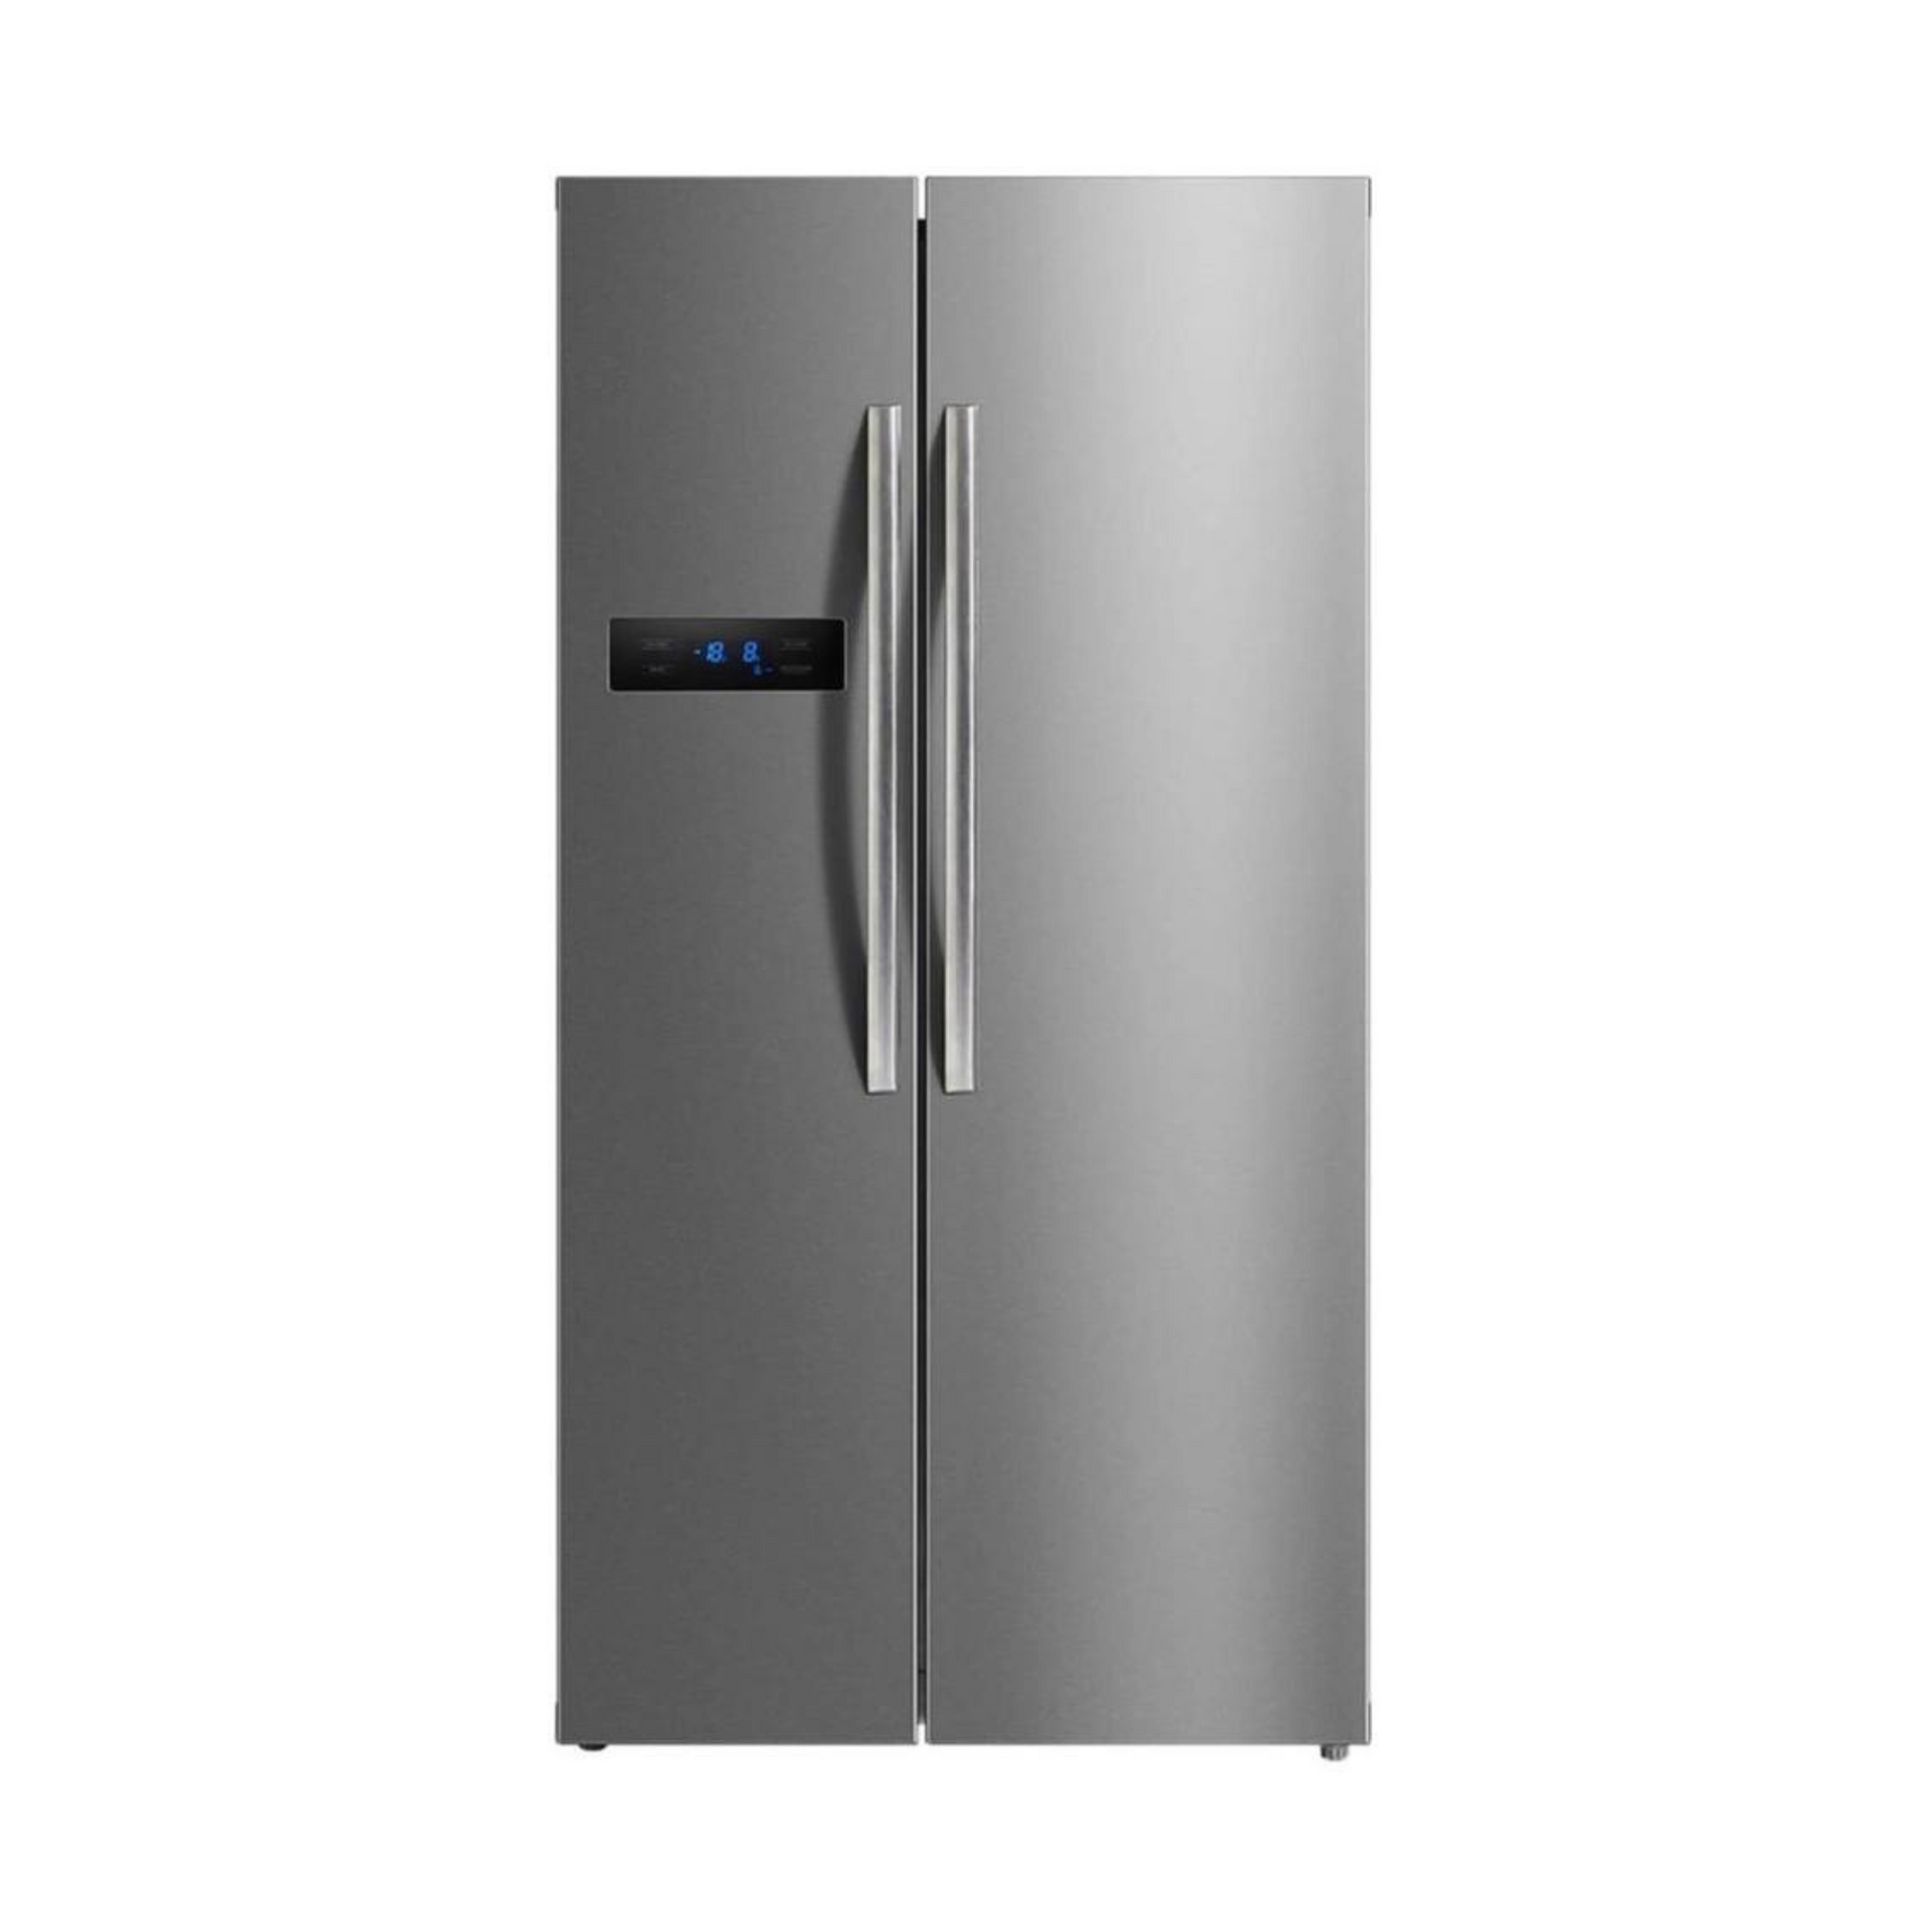 Midea 690L Side by Side Refrigerator, HC689WENS